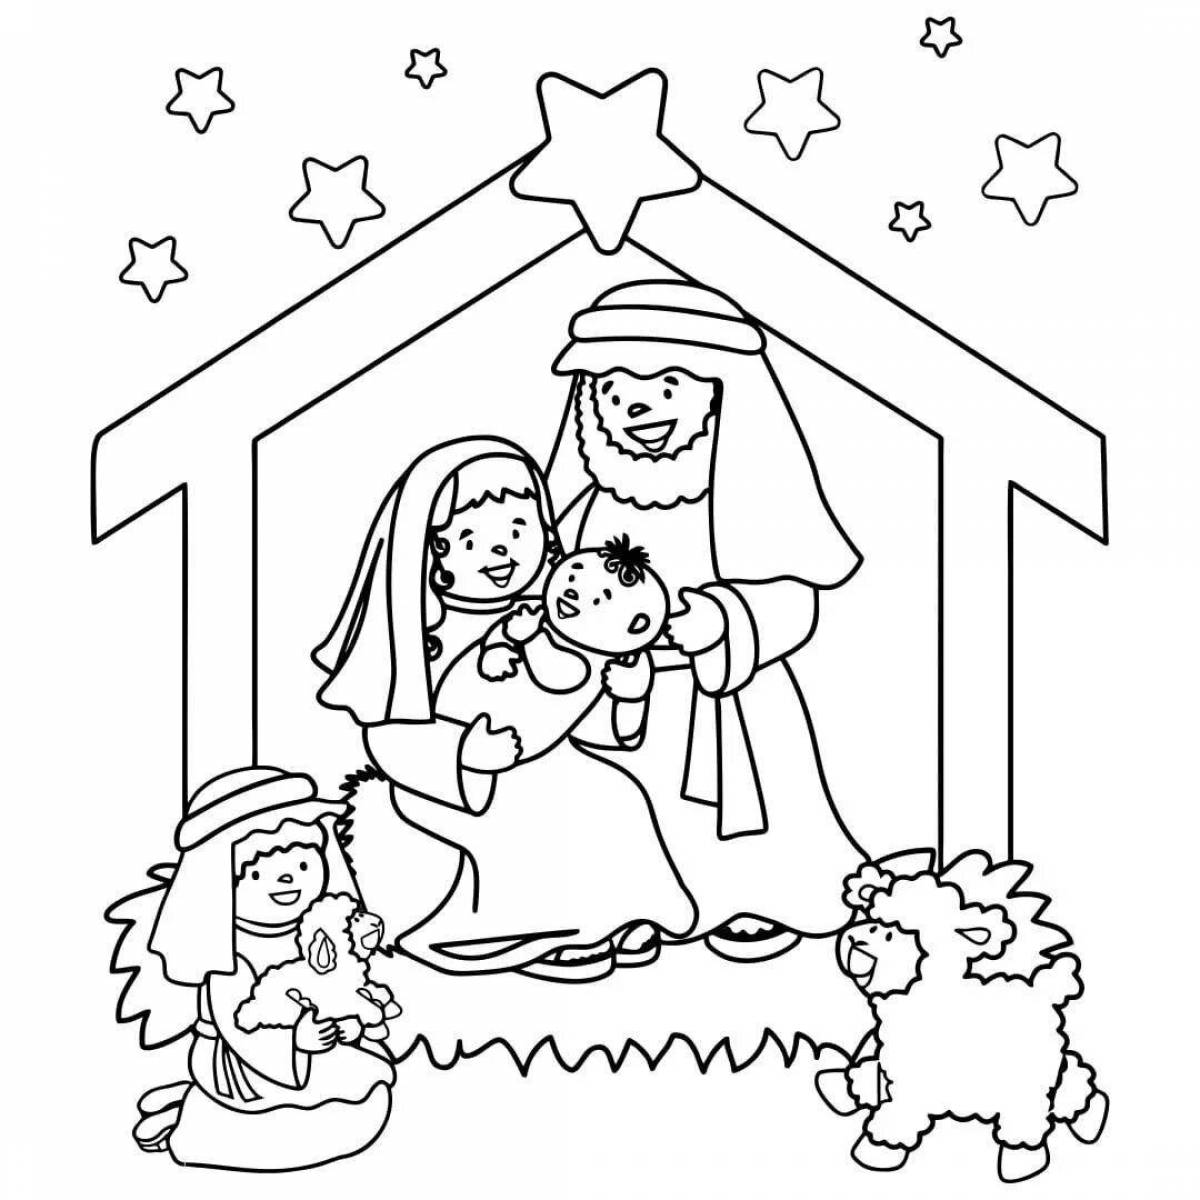 Wonderful nativity scene coloring book